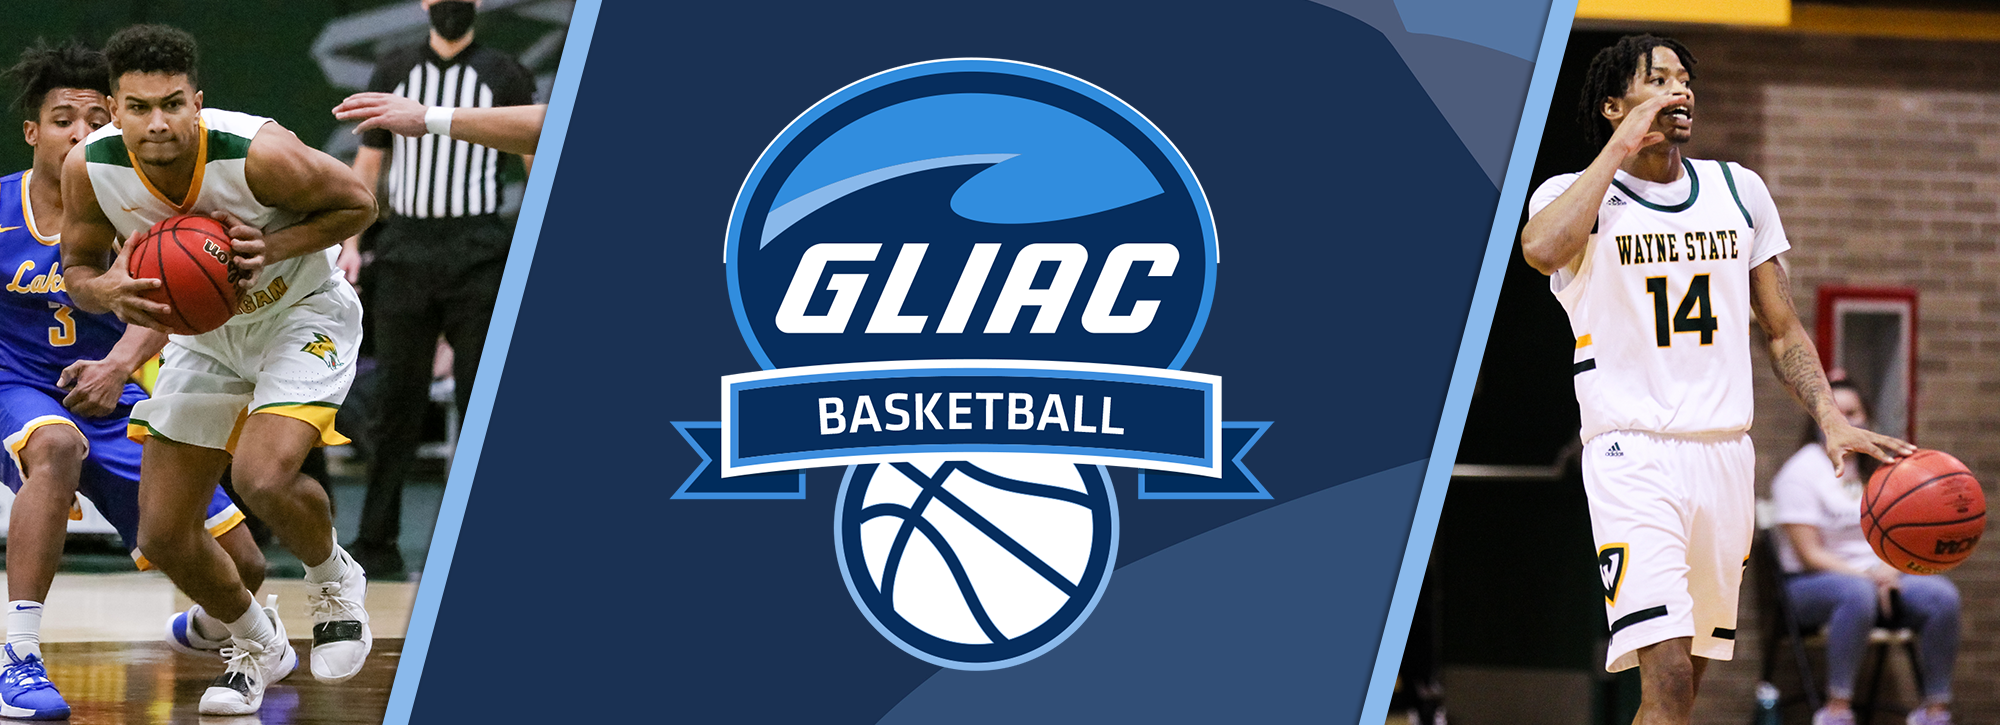 NMU's Bjorklund, WSU's Owens-White Named GLIAC Men's Basketball Players of the Week